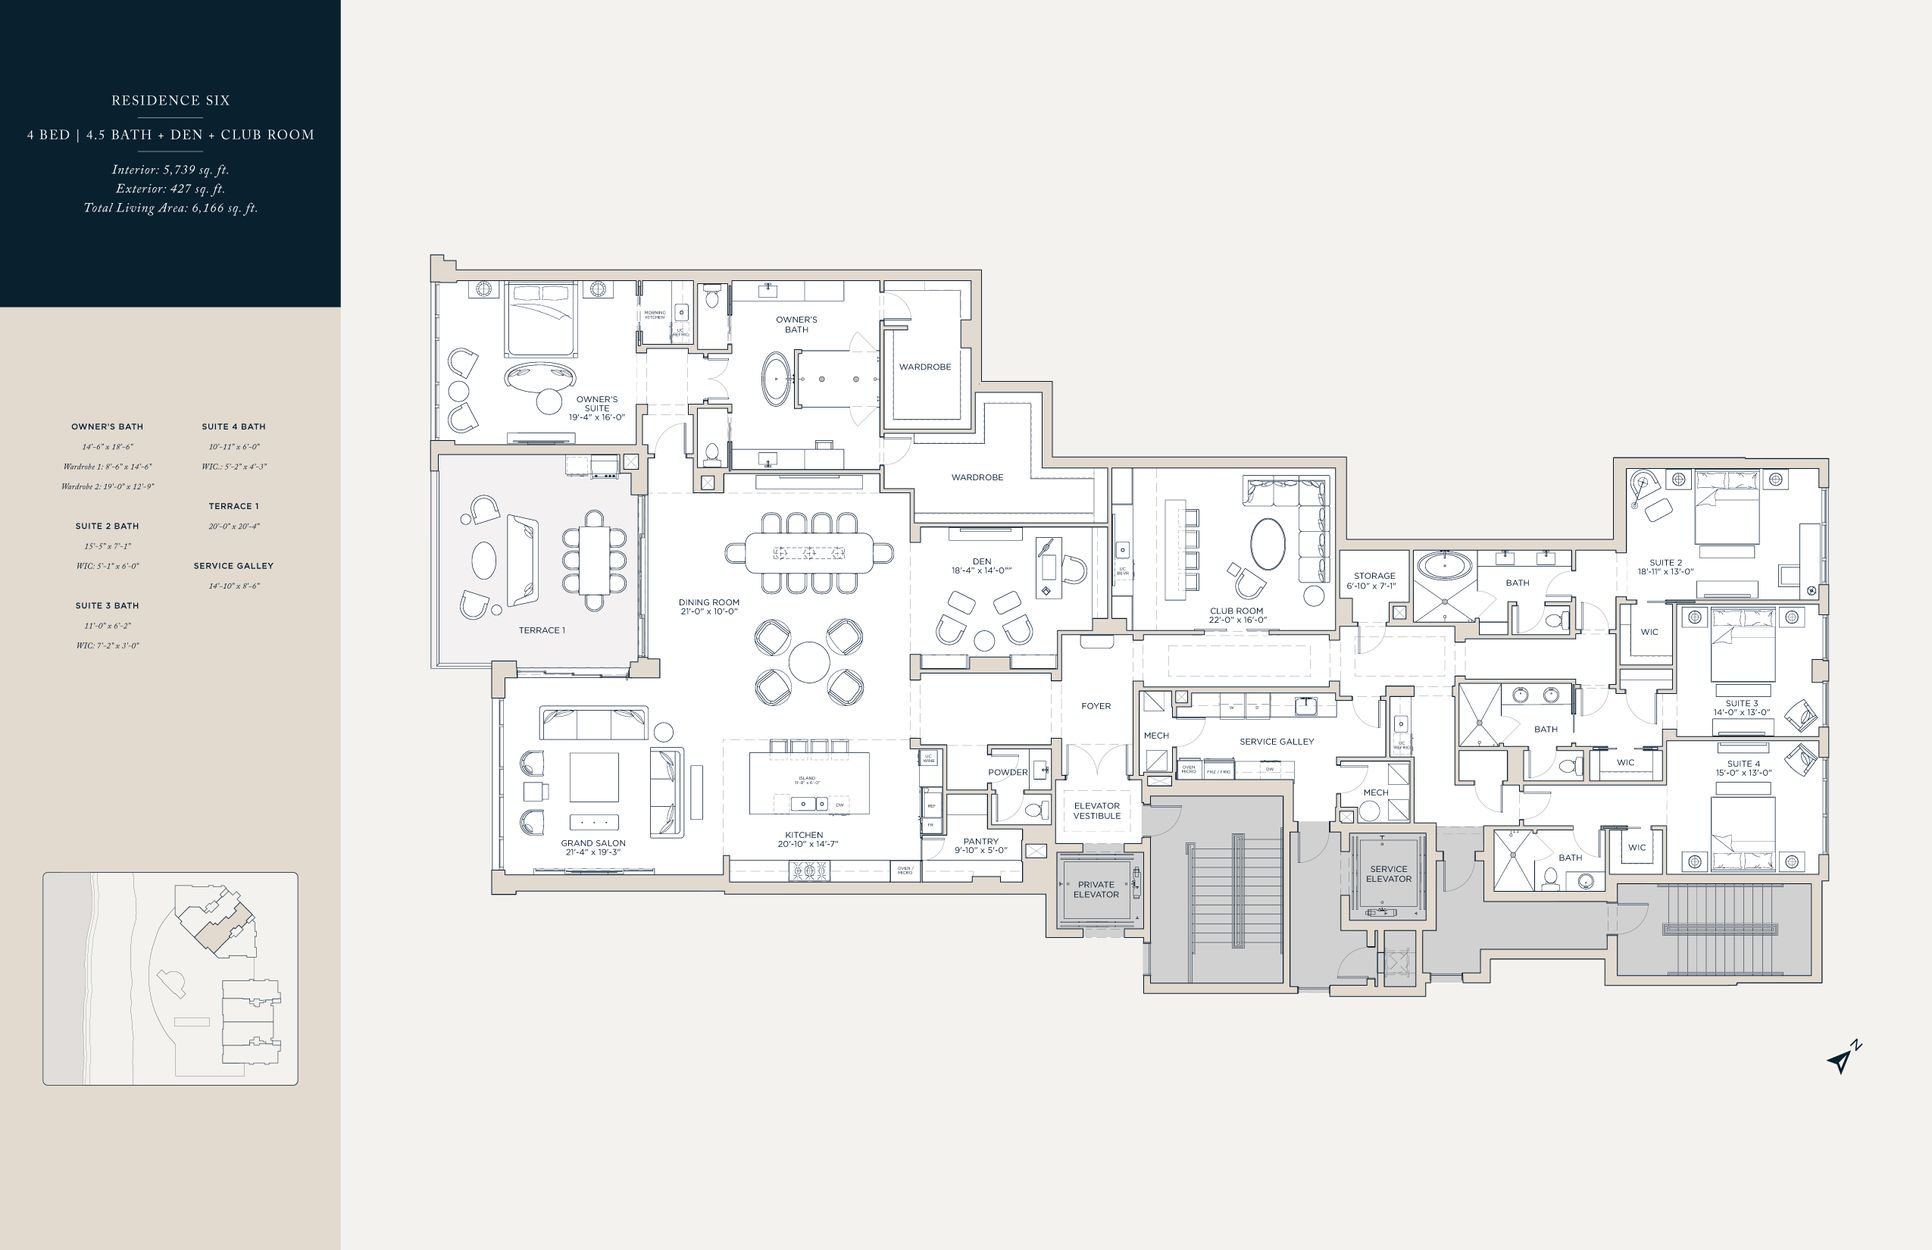 Residence 07 Floorplan:Residence 07 Floorplan